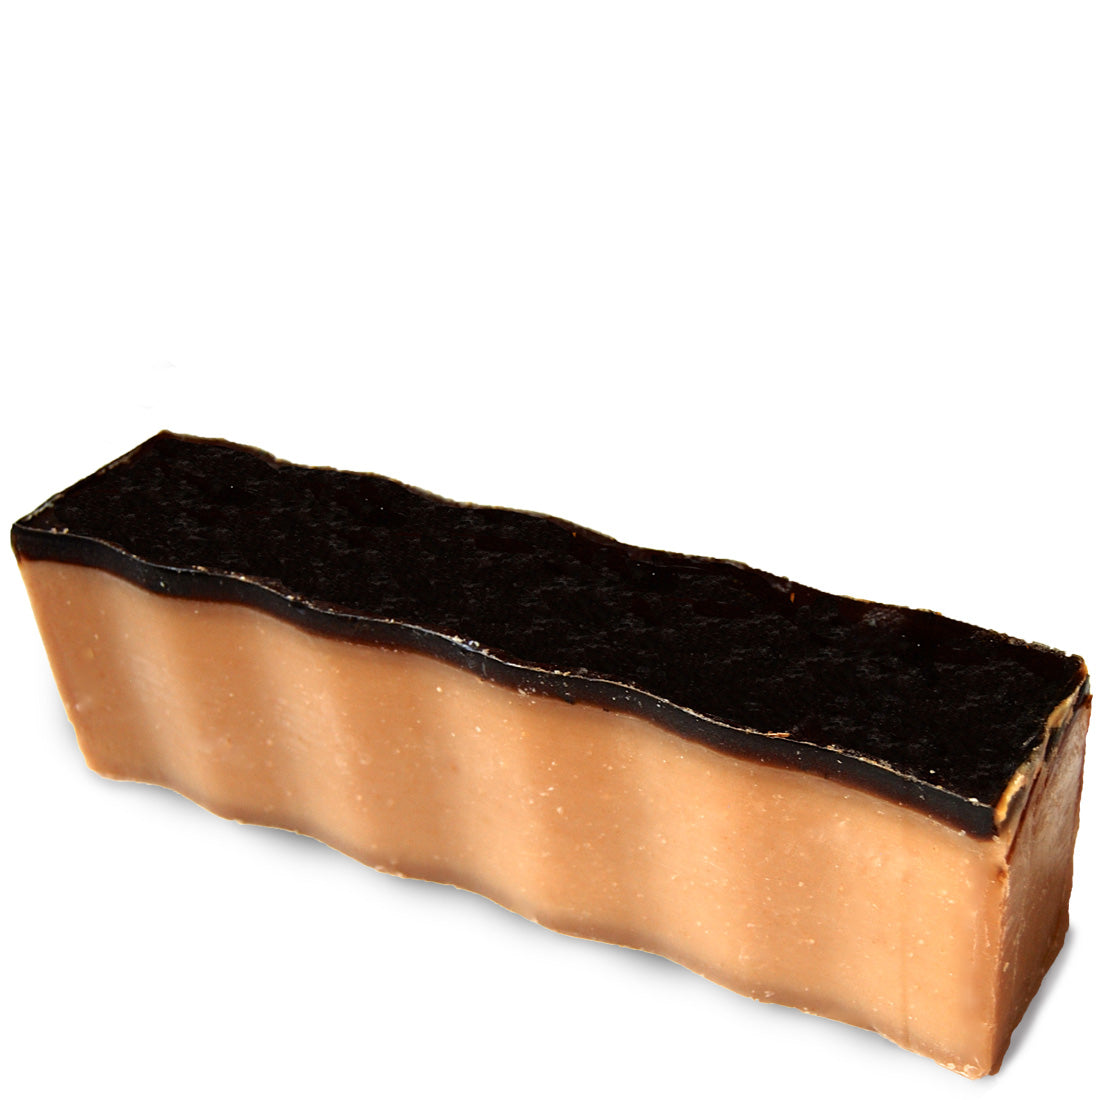 Two-tone brown wavy rectangular 45 ounce brick of frankincense & myrrh scented Zum Bar Soap